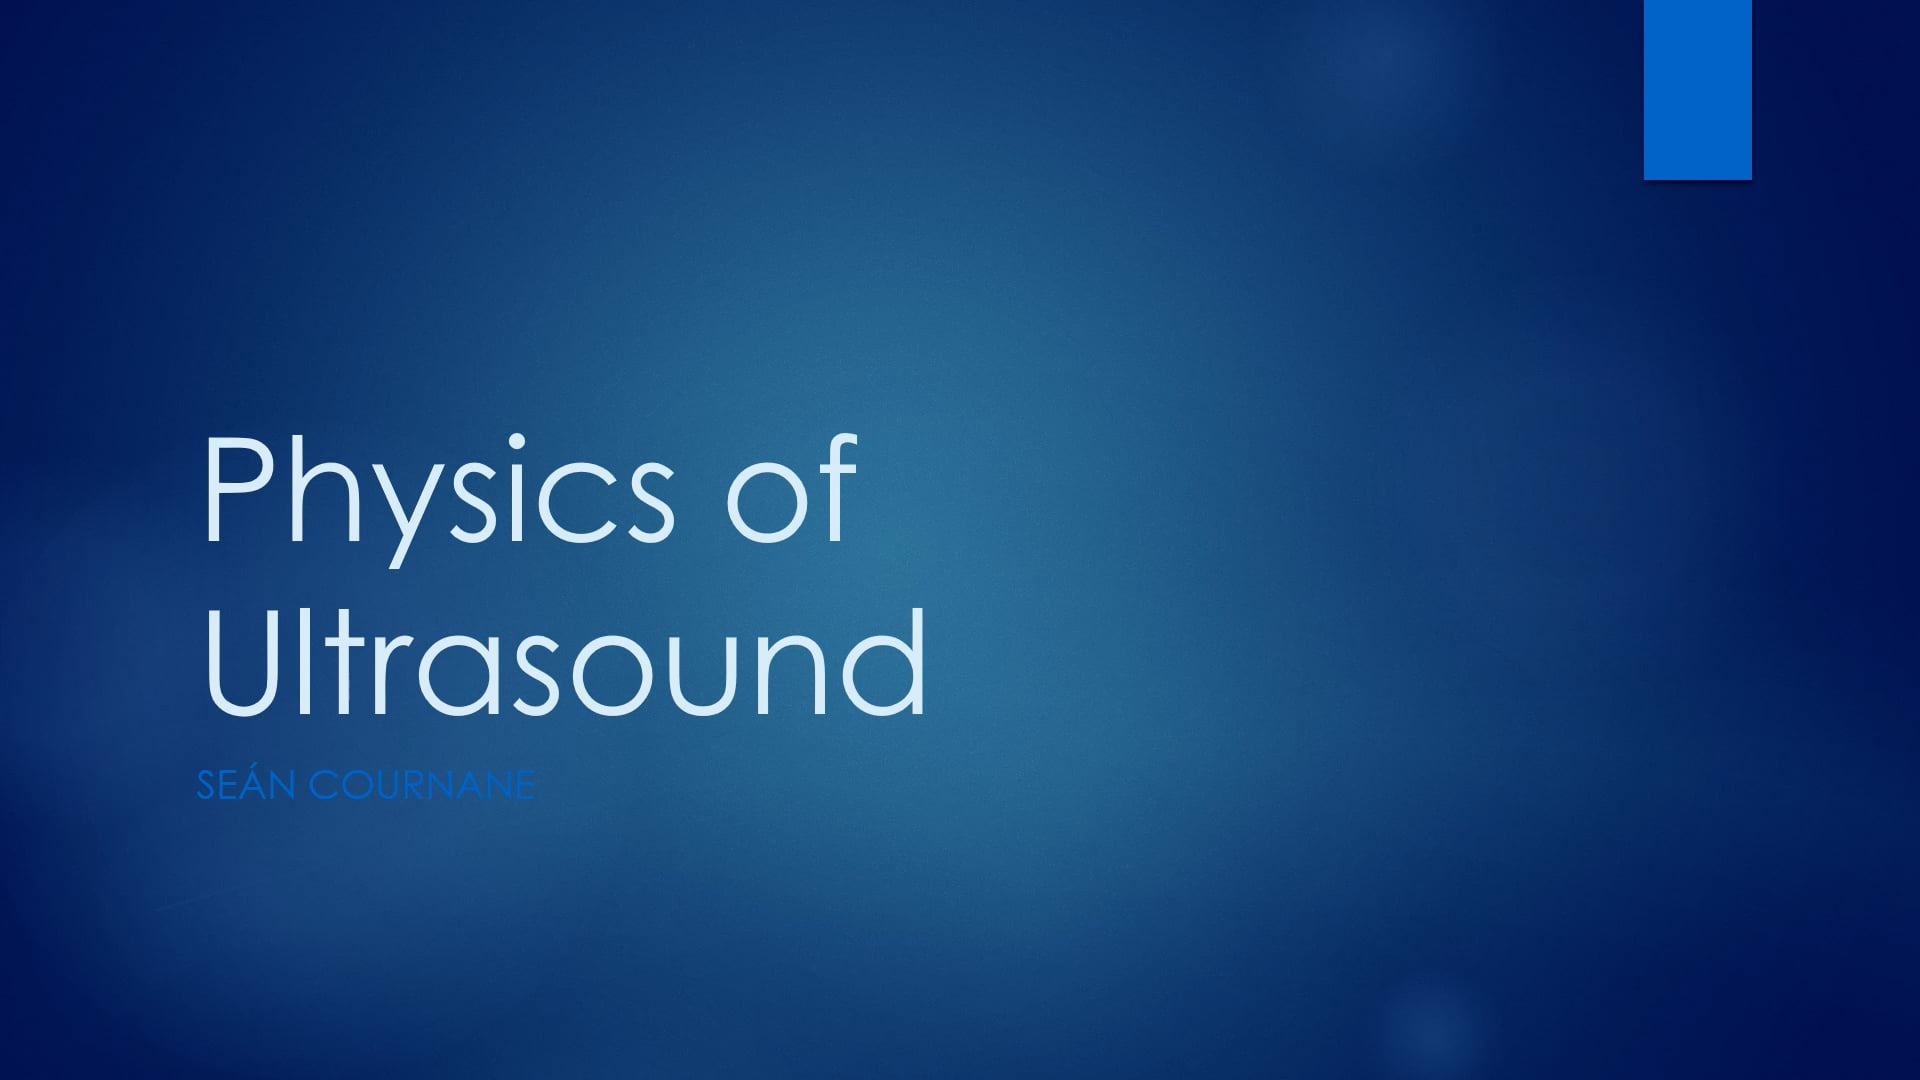 Physics of Ultrasound